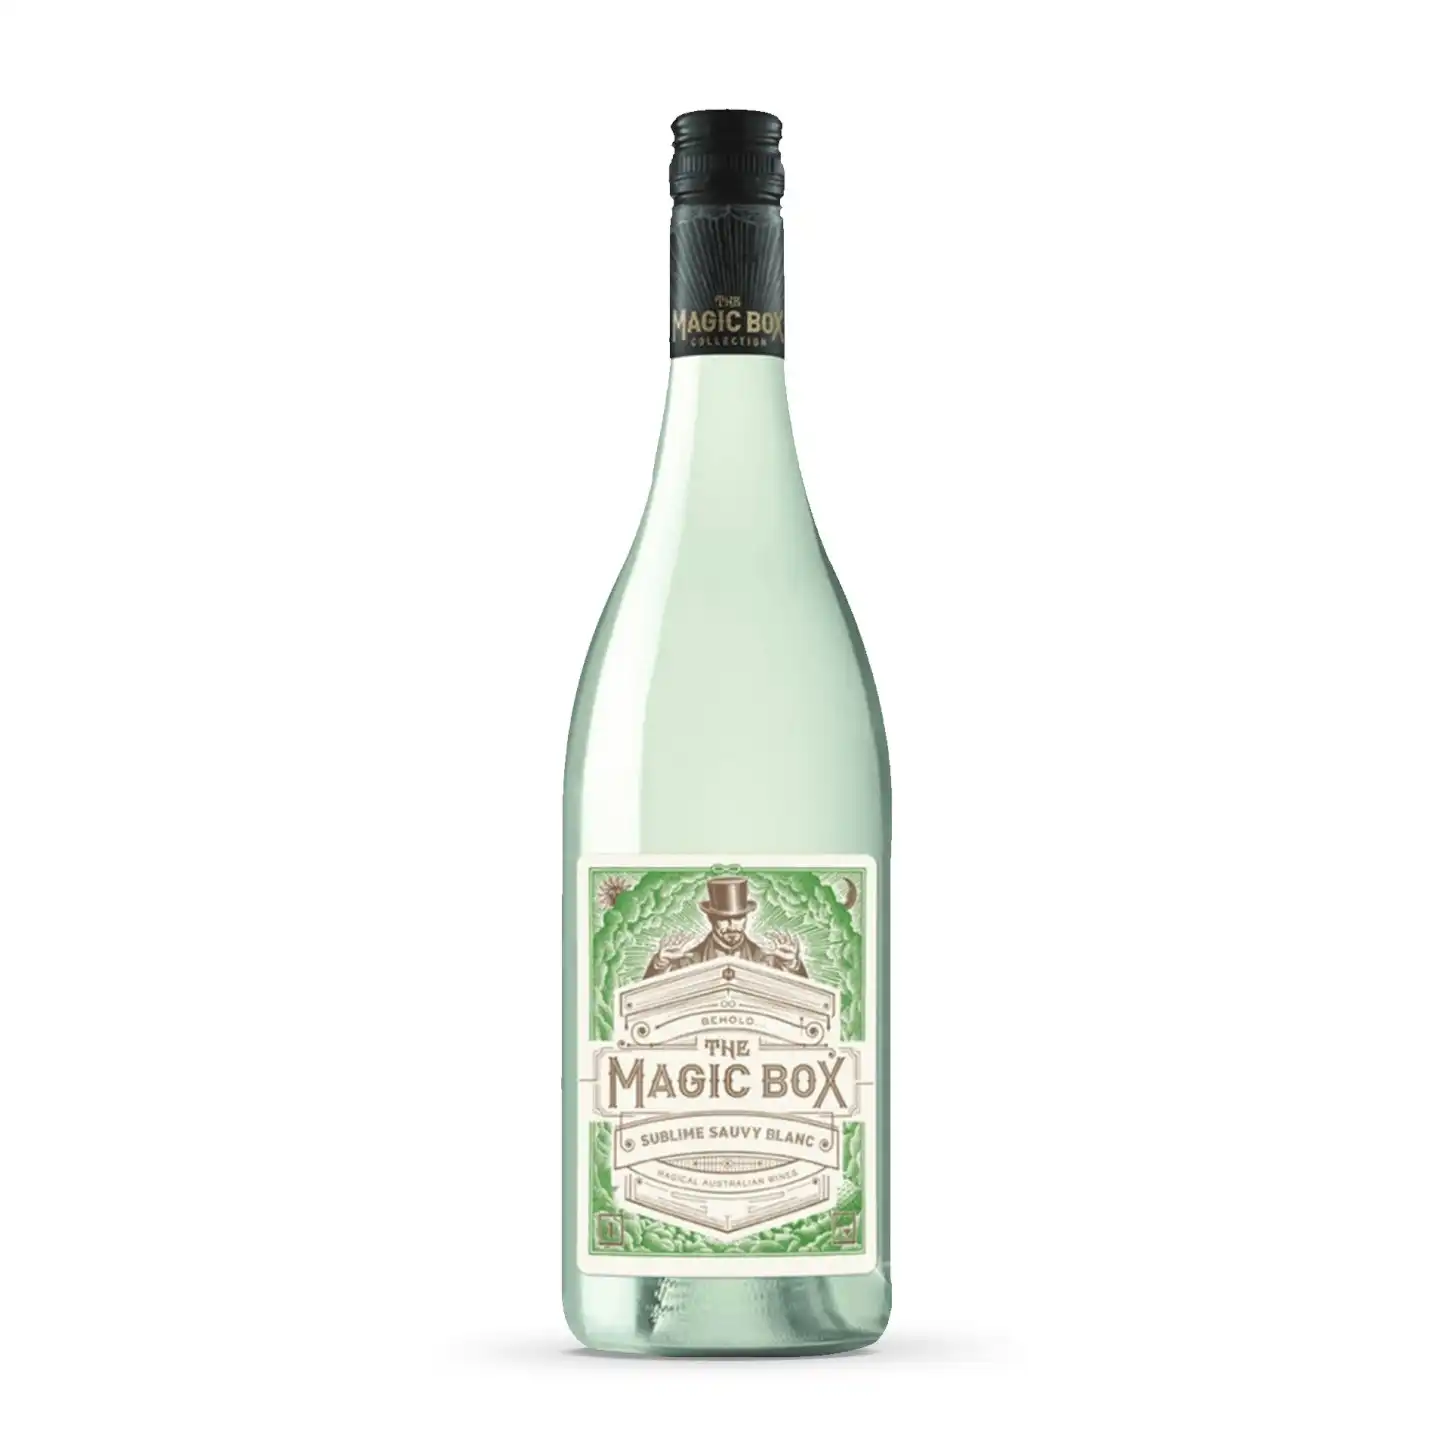 Magic Box Sublime Sauvy Sauvignon Blanc 2021 (12 bottles)